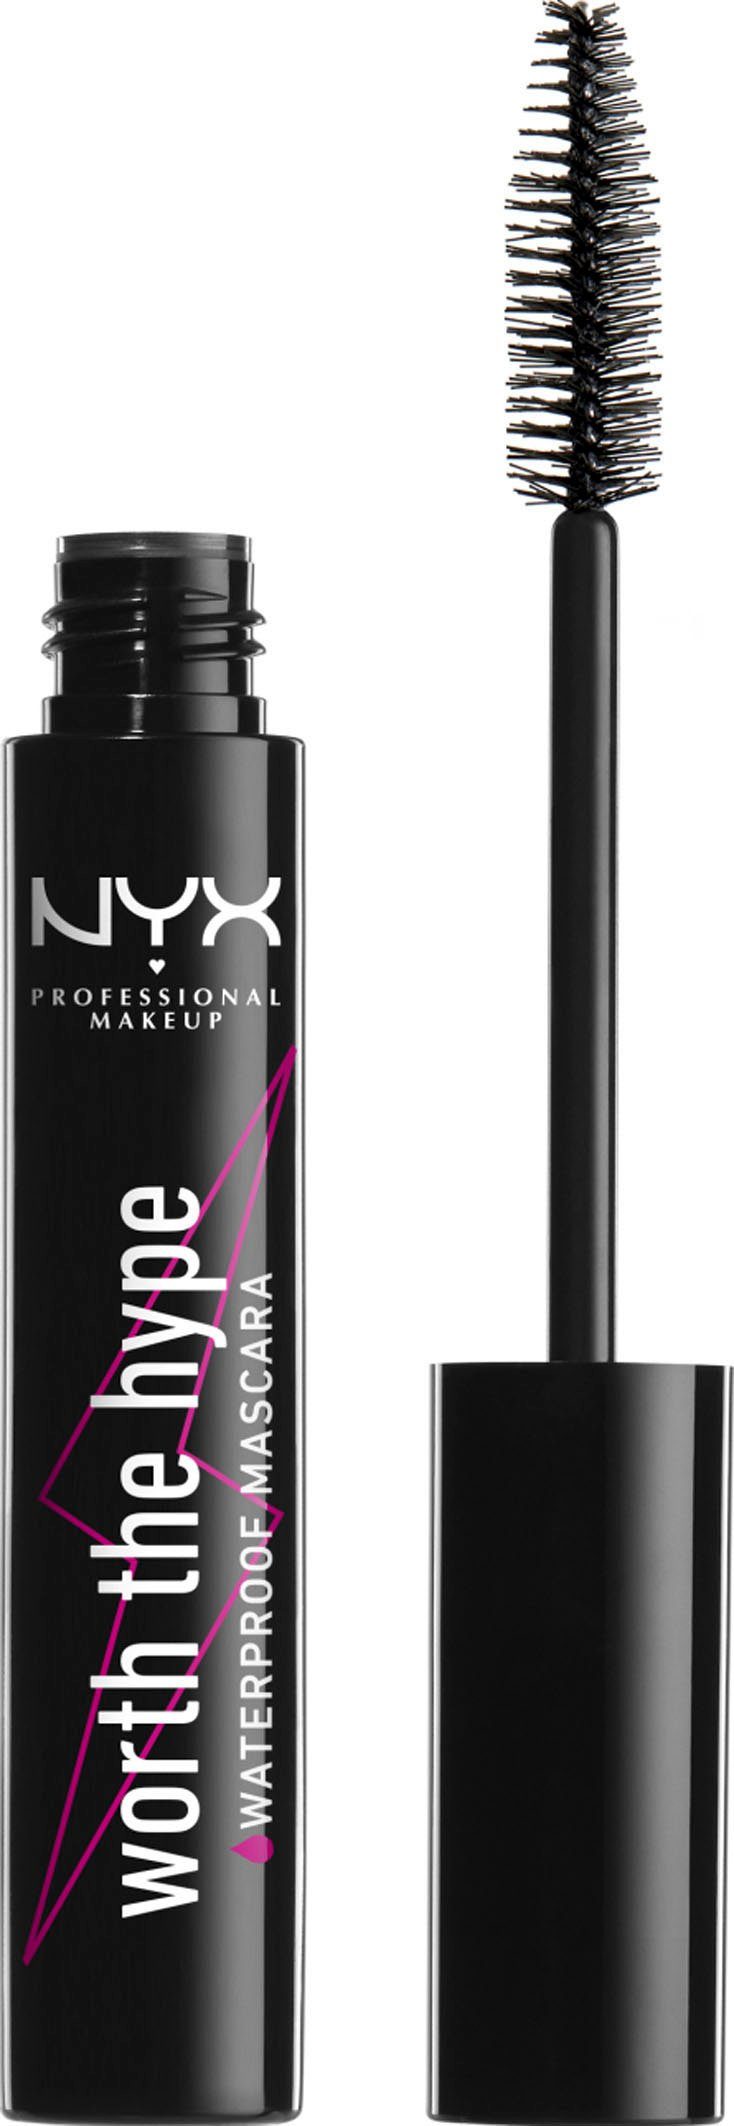 NYX Mascara Professional Makeup The Mascara Waterproof Worth Hype